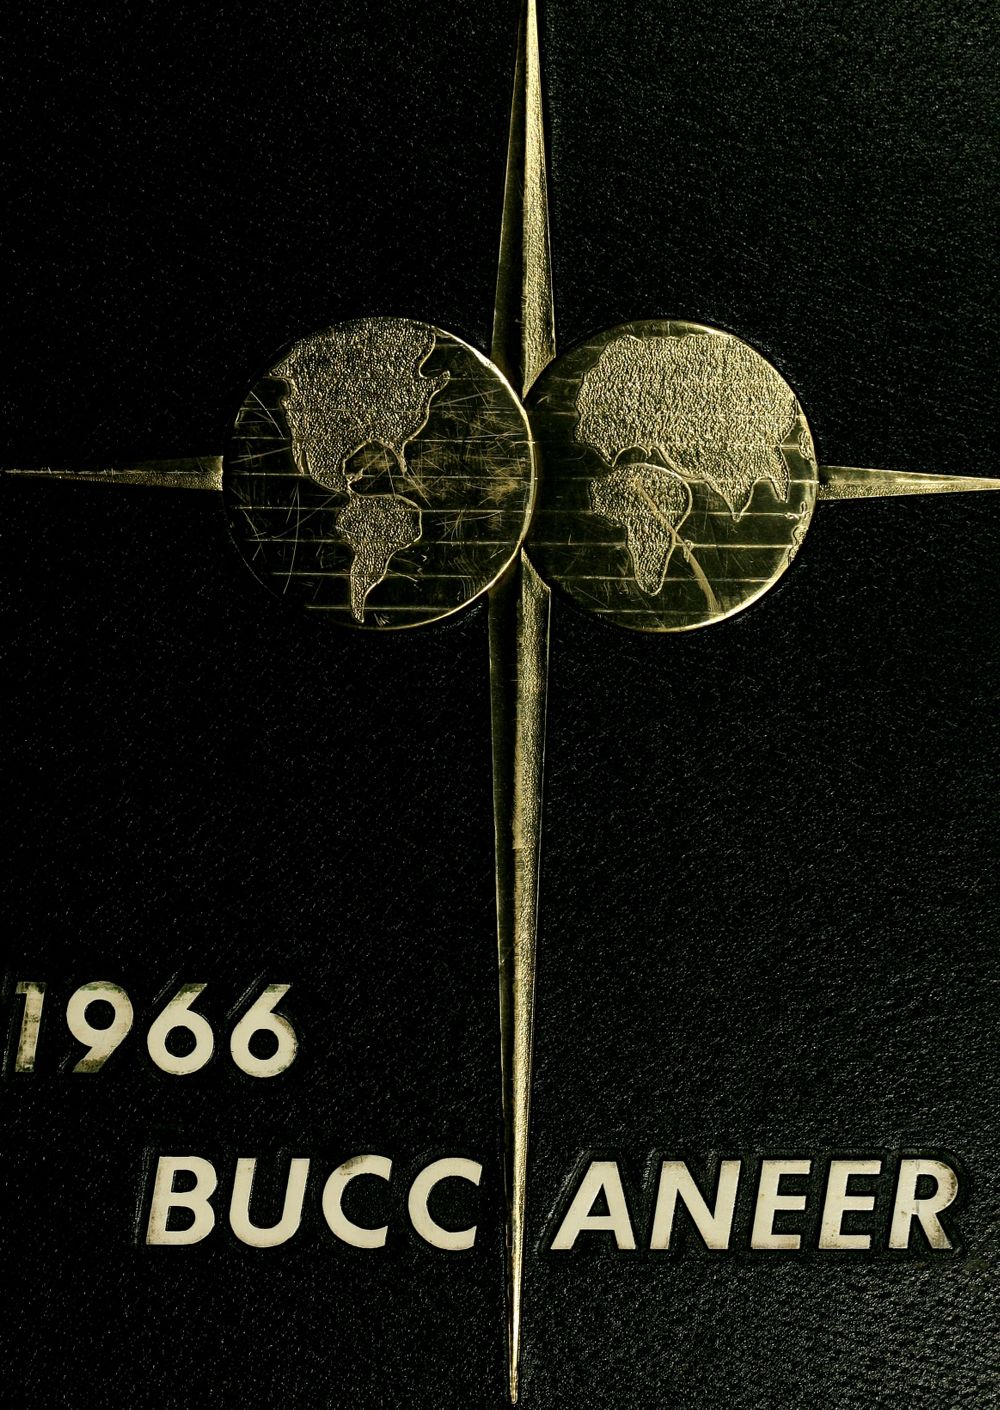 Buccaneer 1966 picture picture